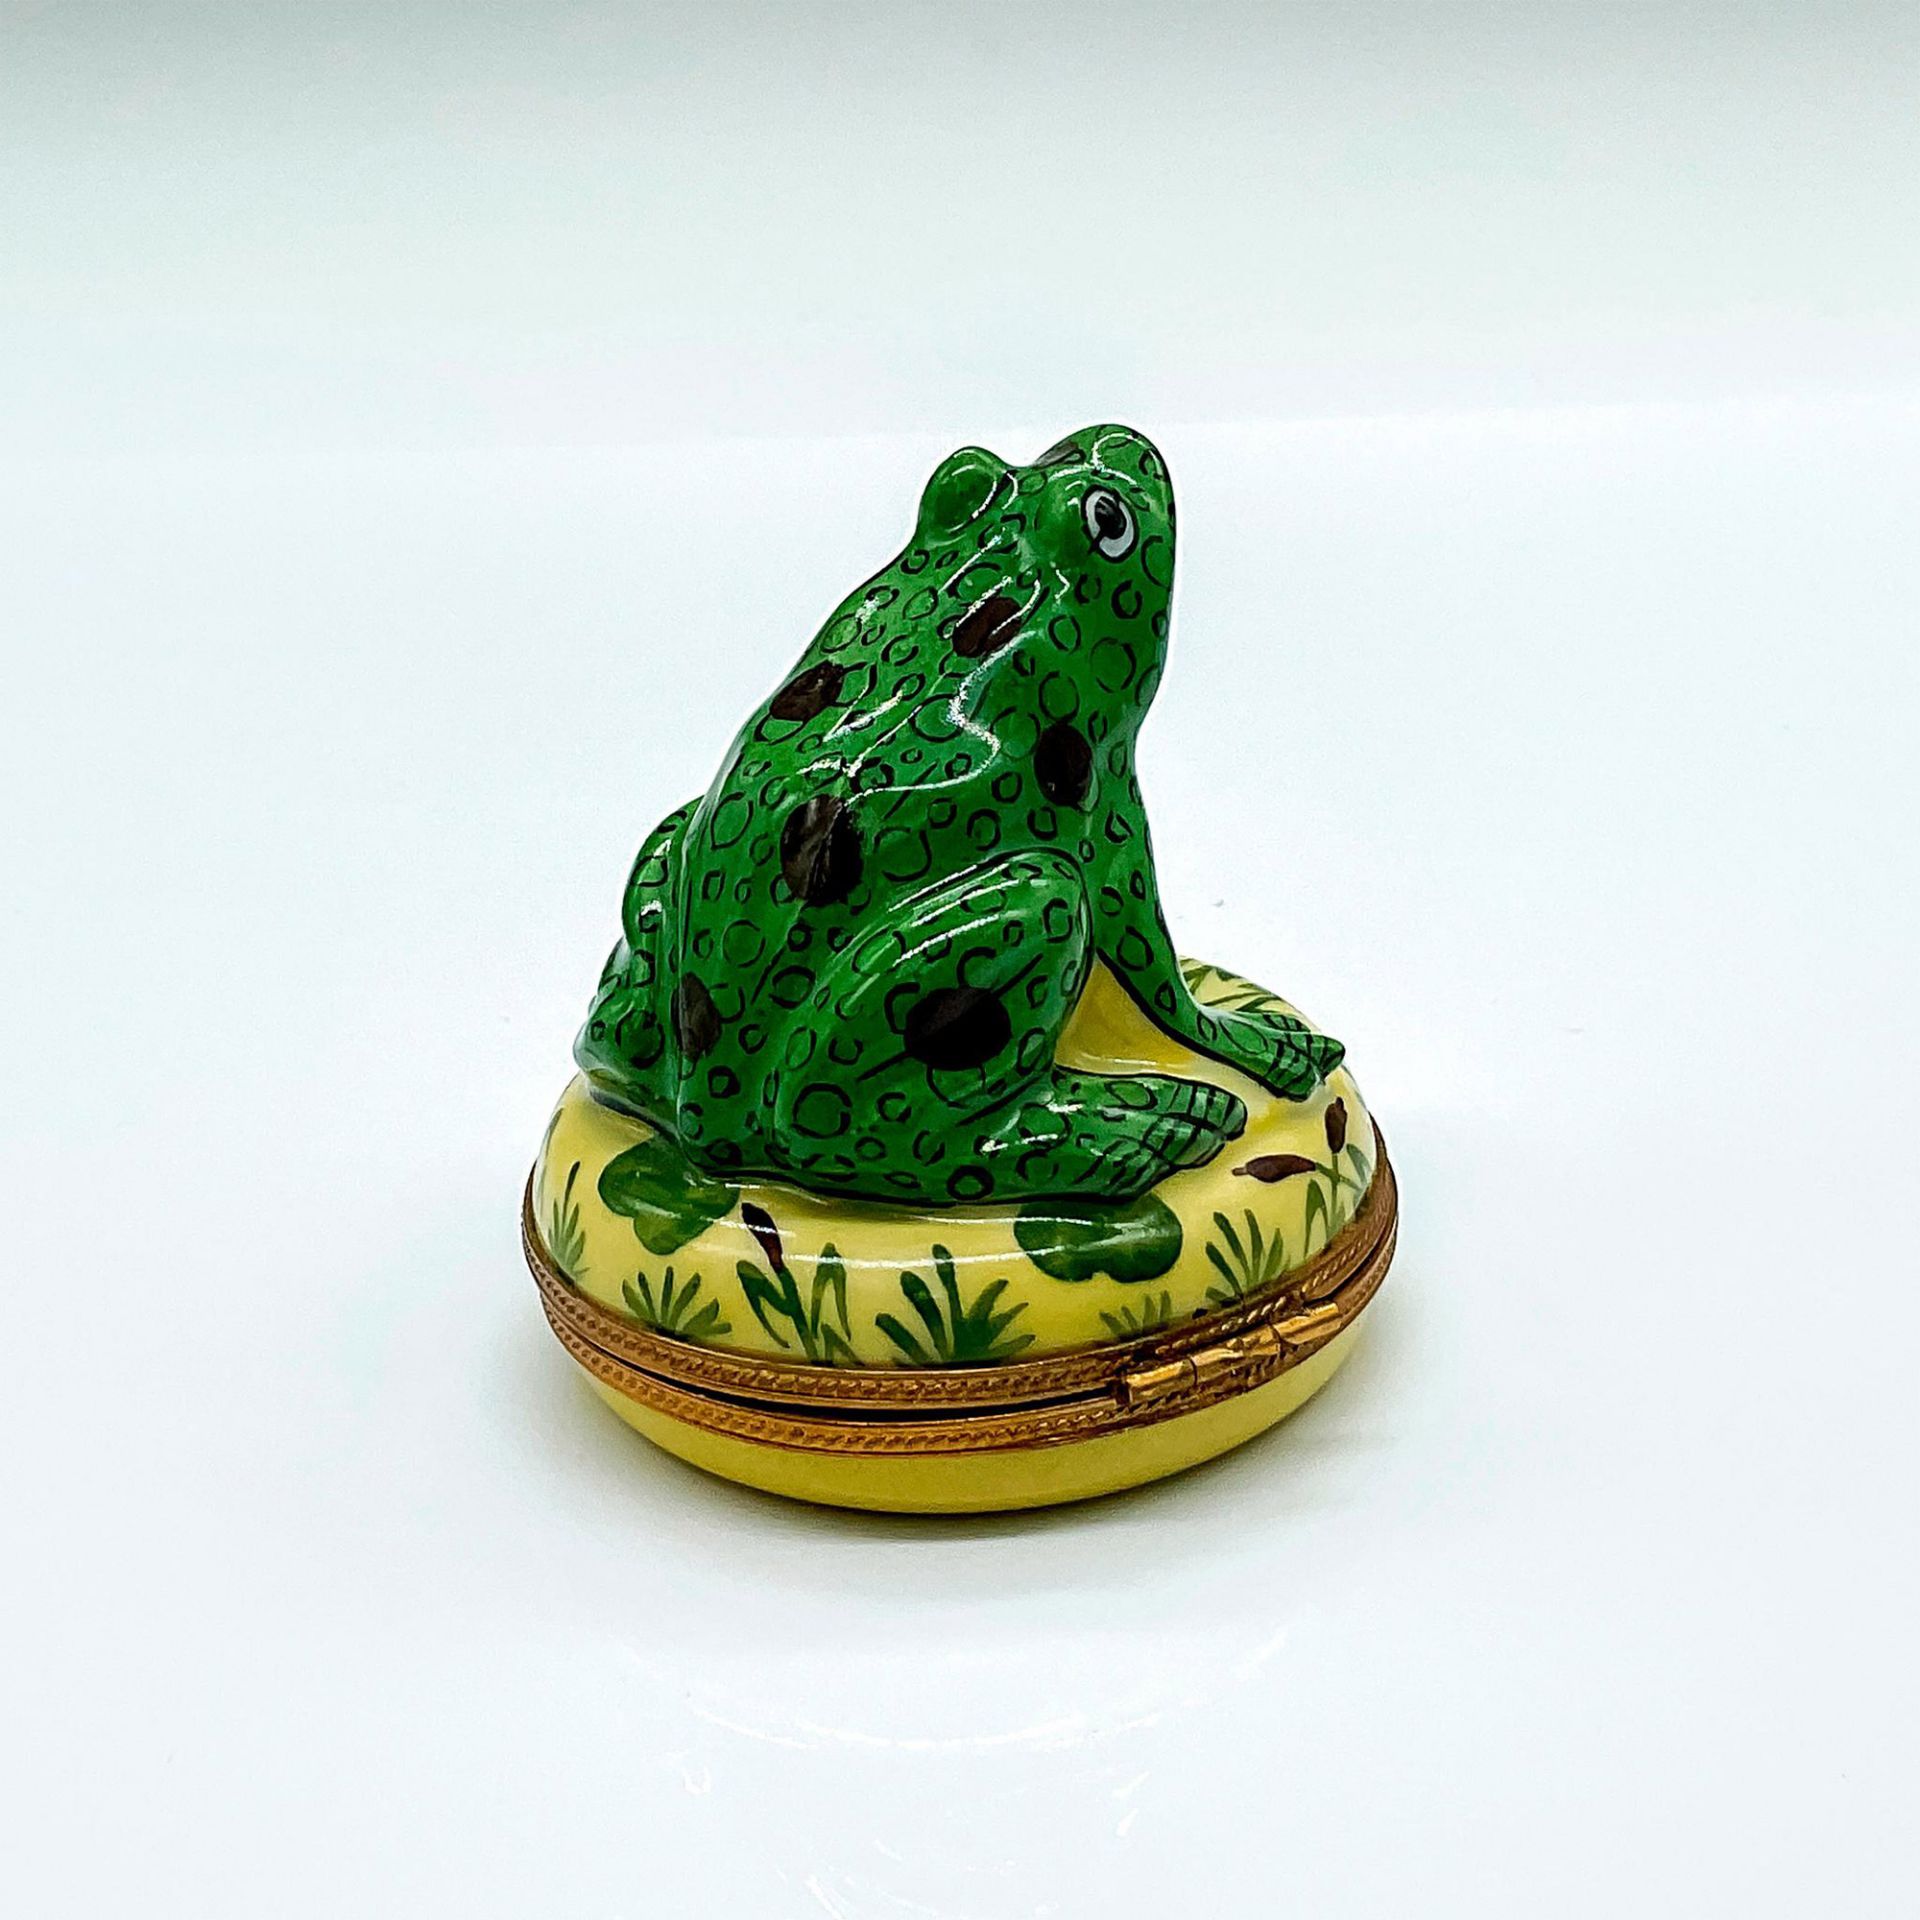 Vintage Limoges E.M. Porcelain Frog and Cattails Box - Image 2 of 4